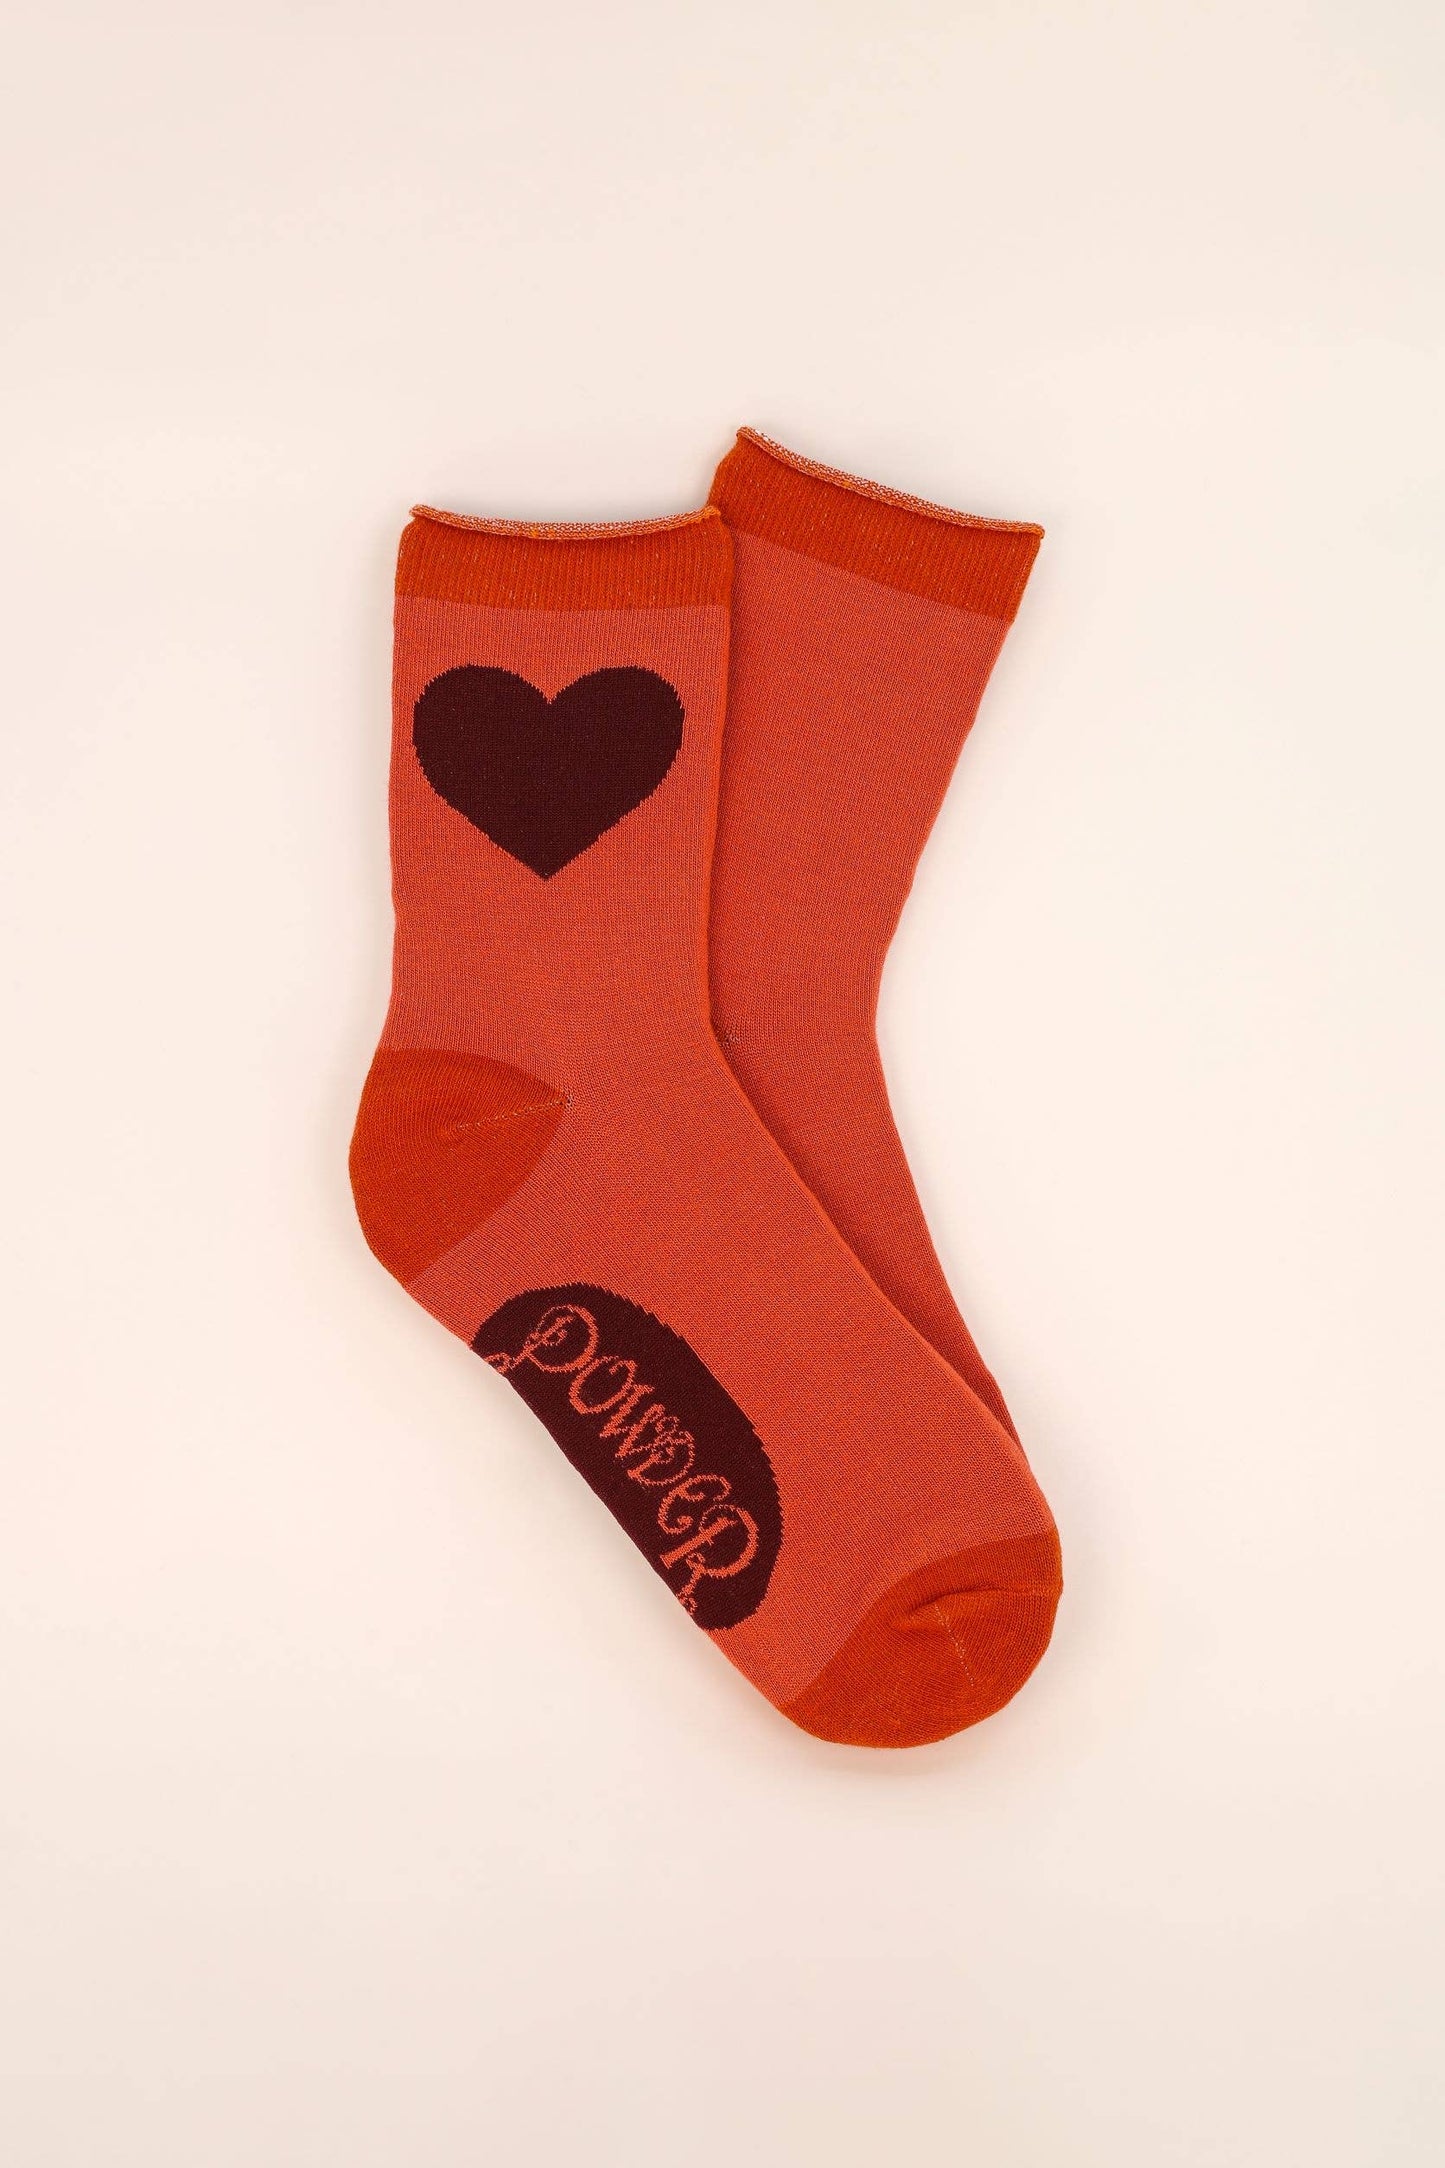 Powder Design inc - You Have My Heart Ankle Socks - Tangerine